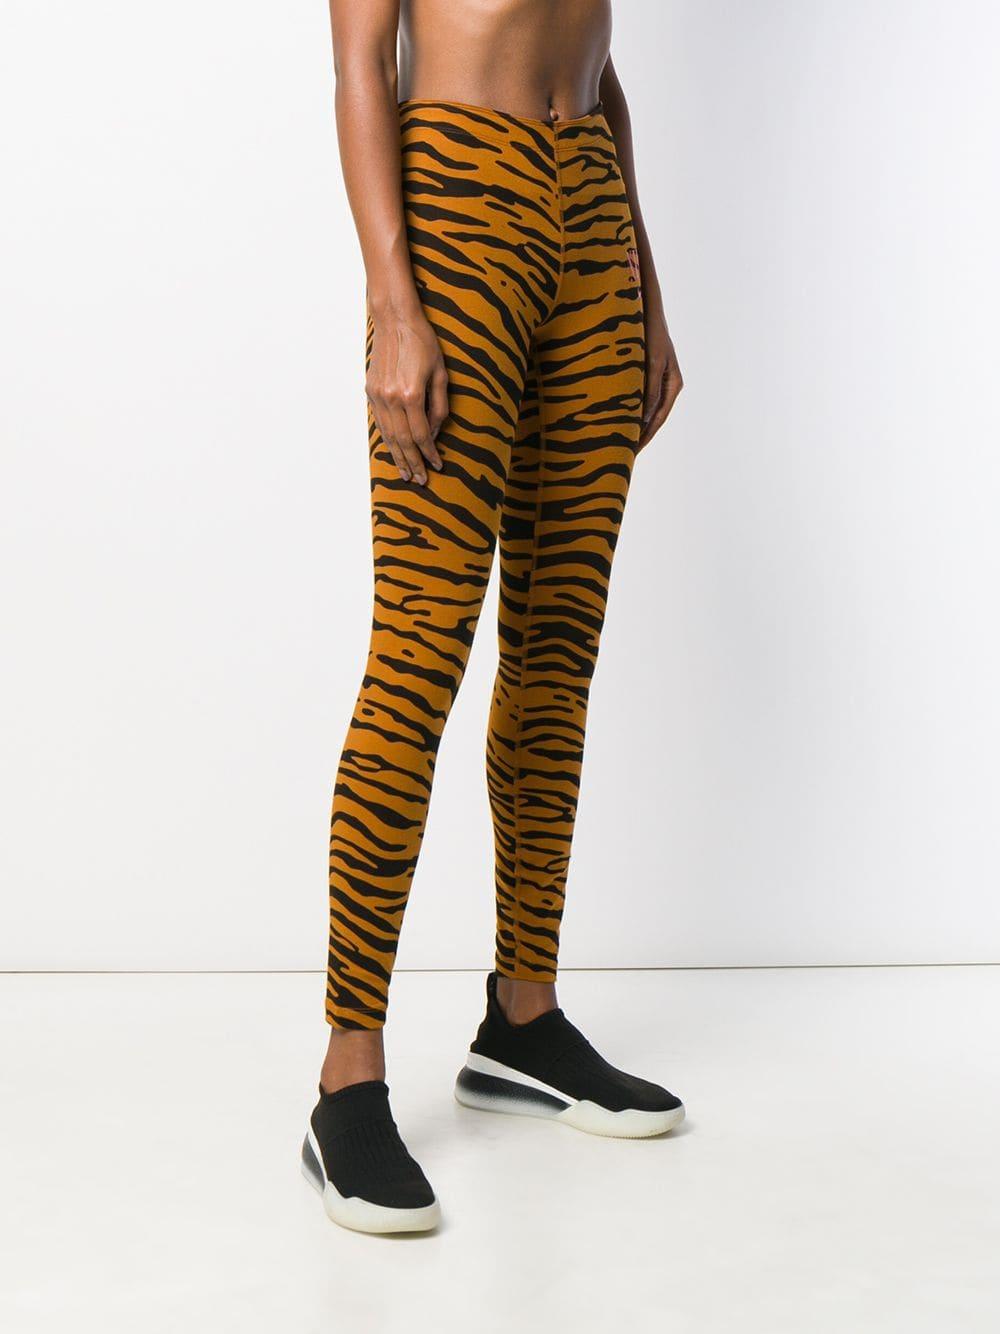 Nike Cotton Tiger Print leggings in 